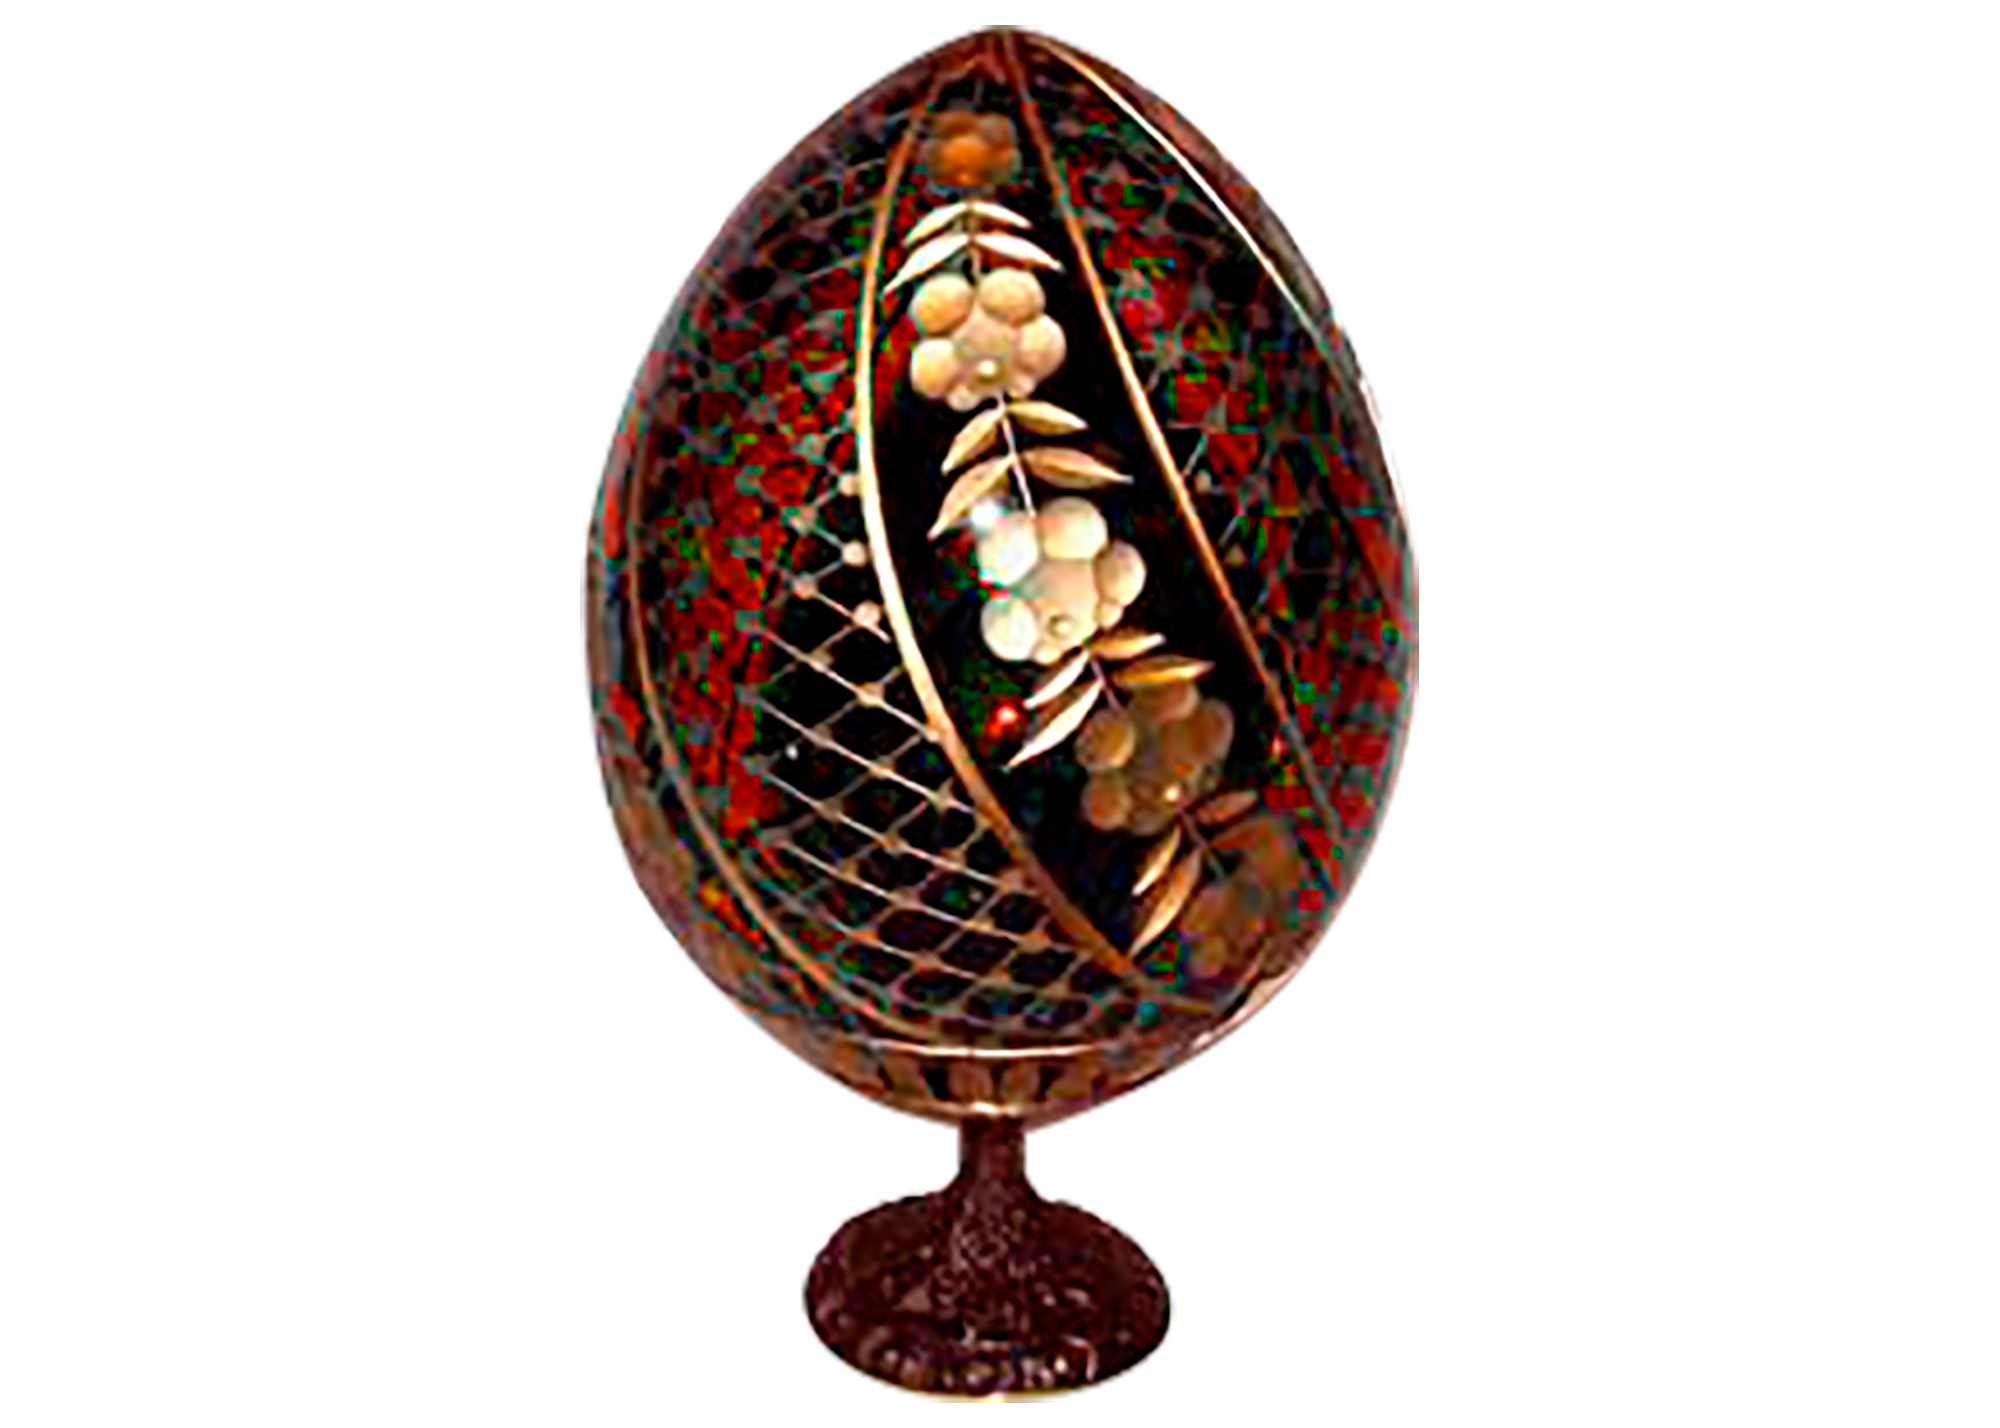 Buy Swirl w/ Flowers RED Russian Egg at GoldenCockerel.com